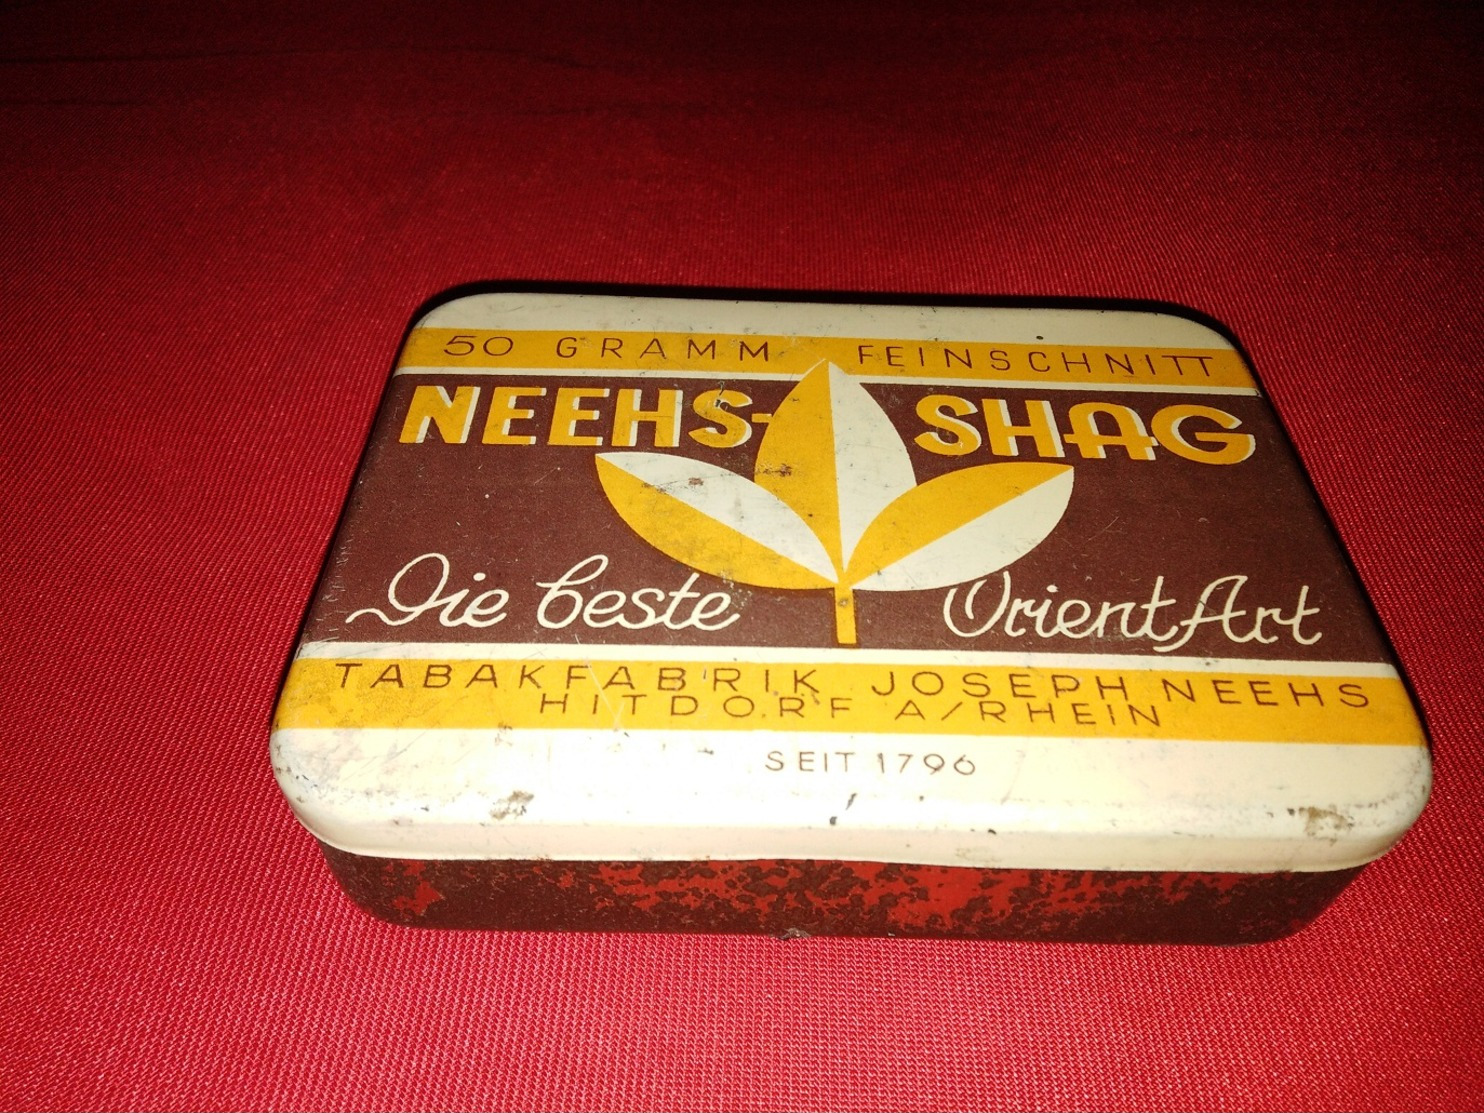 NEEHS SHAG TABAKFABRIK JOSEPH NEEHS HITDORF OLD TIN BOX TOBACCO - RARE - Schnupftabakdosen (leer)